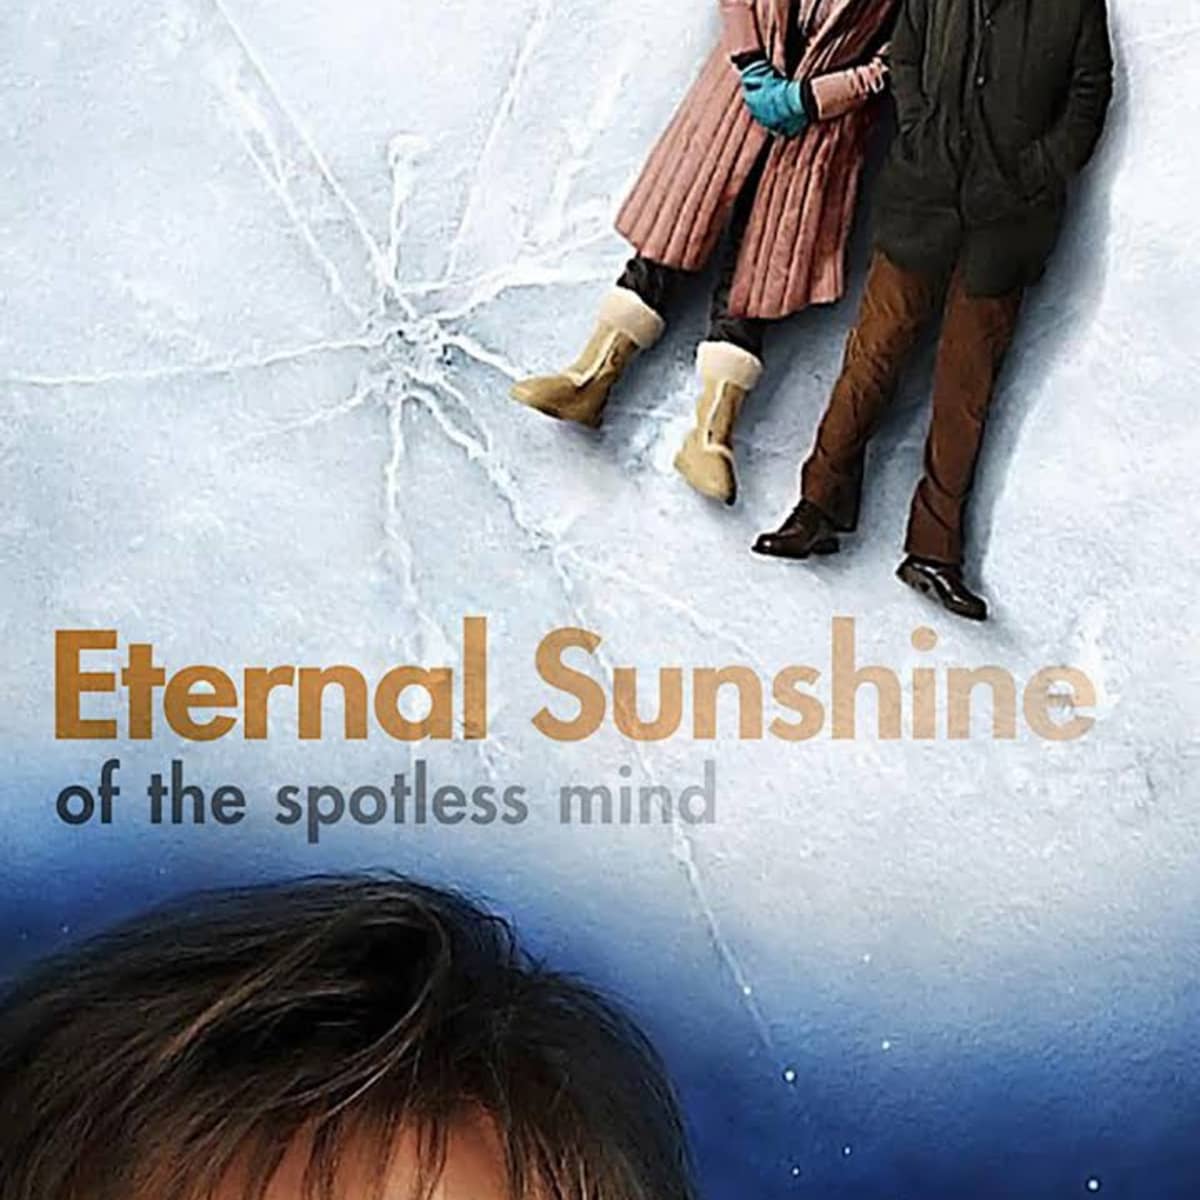 movies like eternal sunshine of the spotless mind reddit